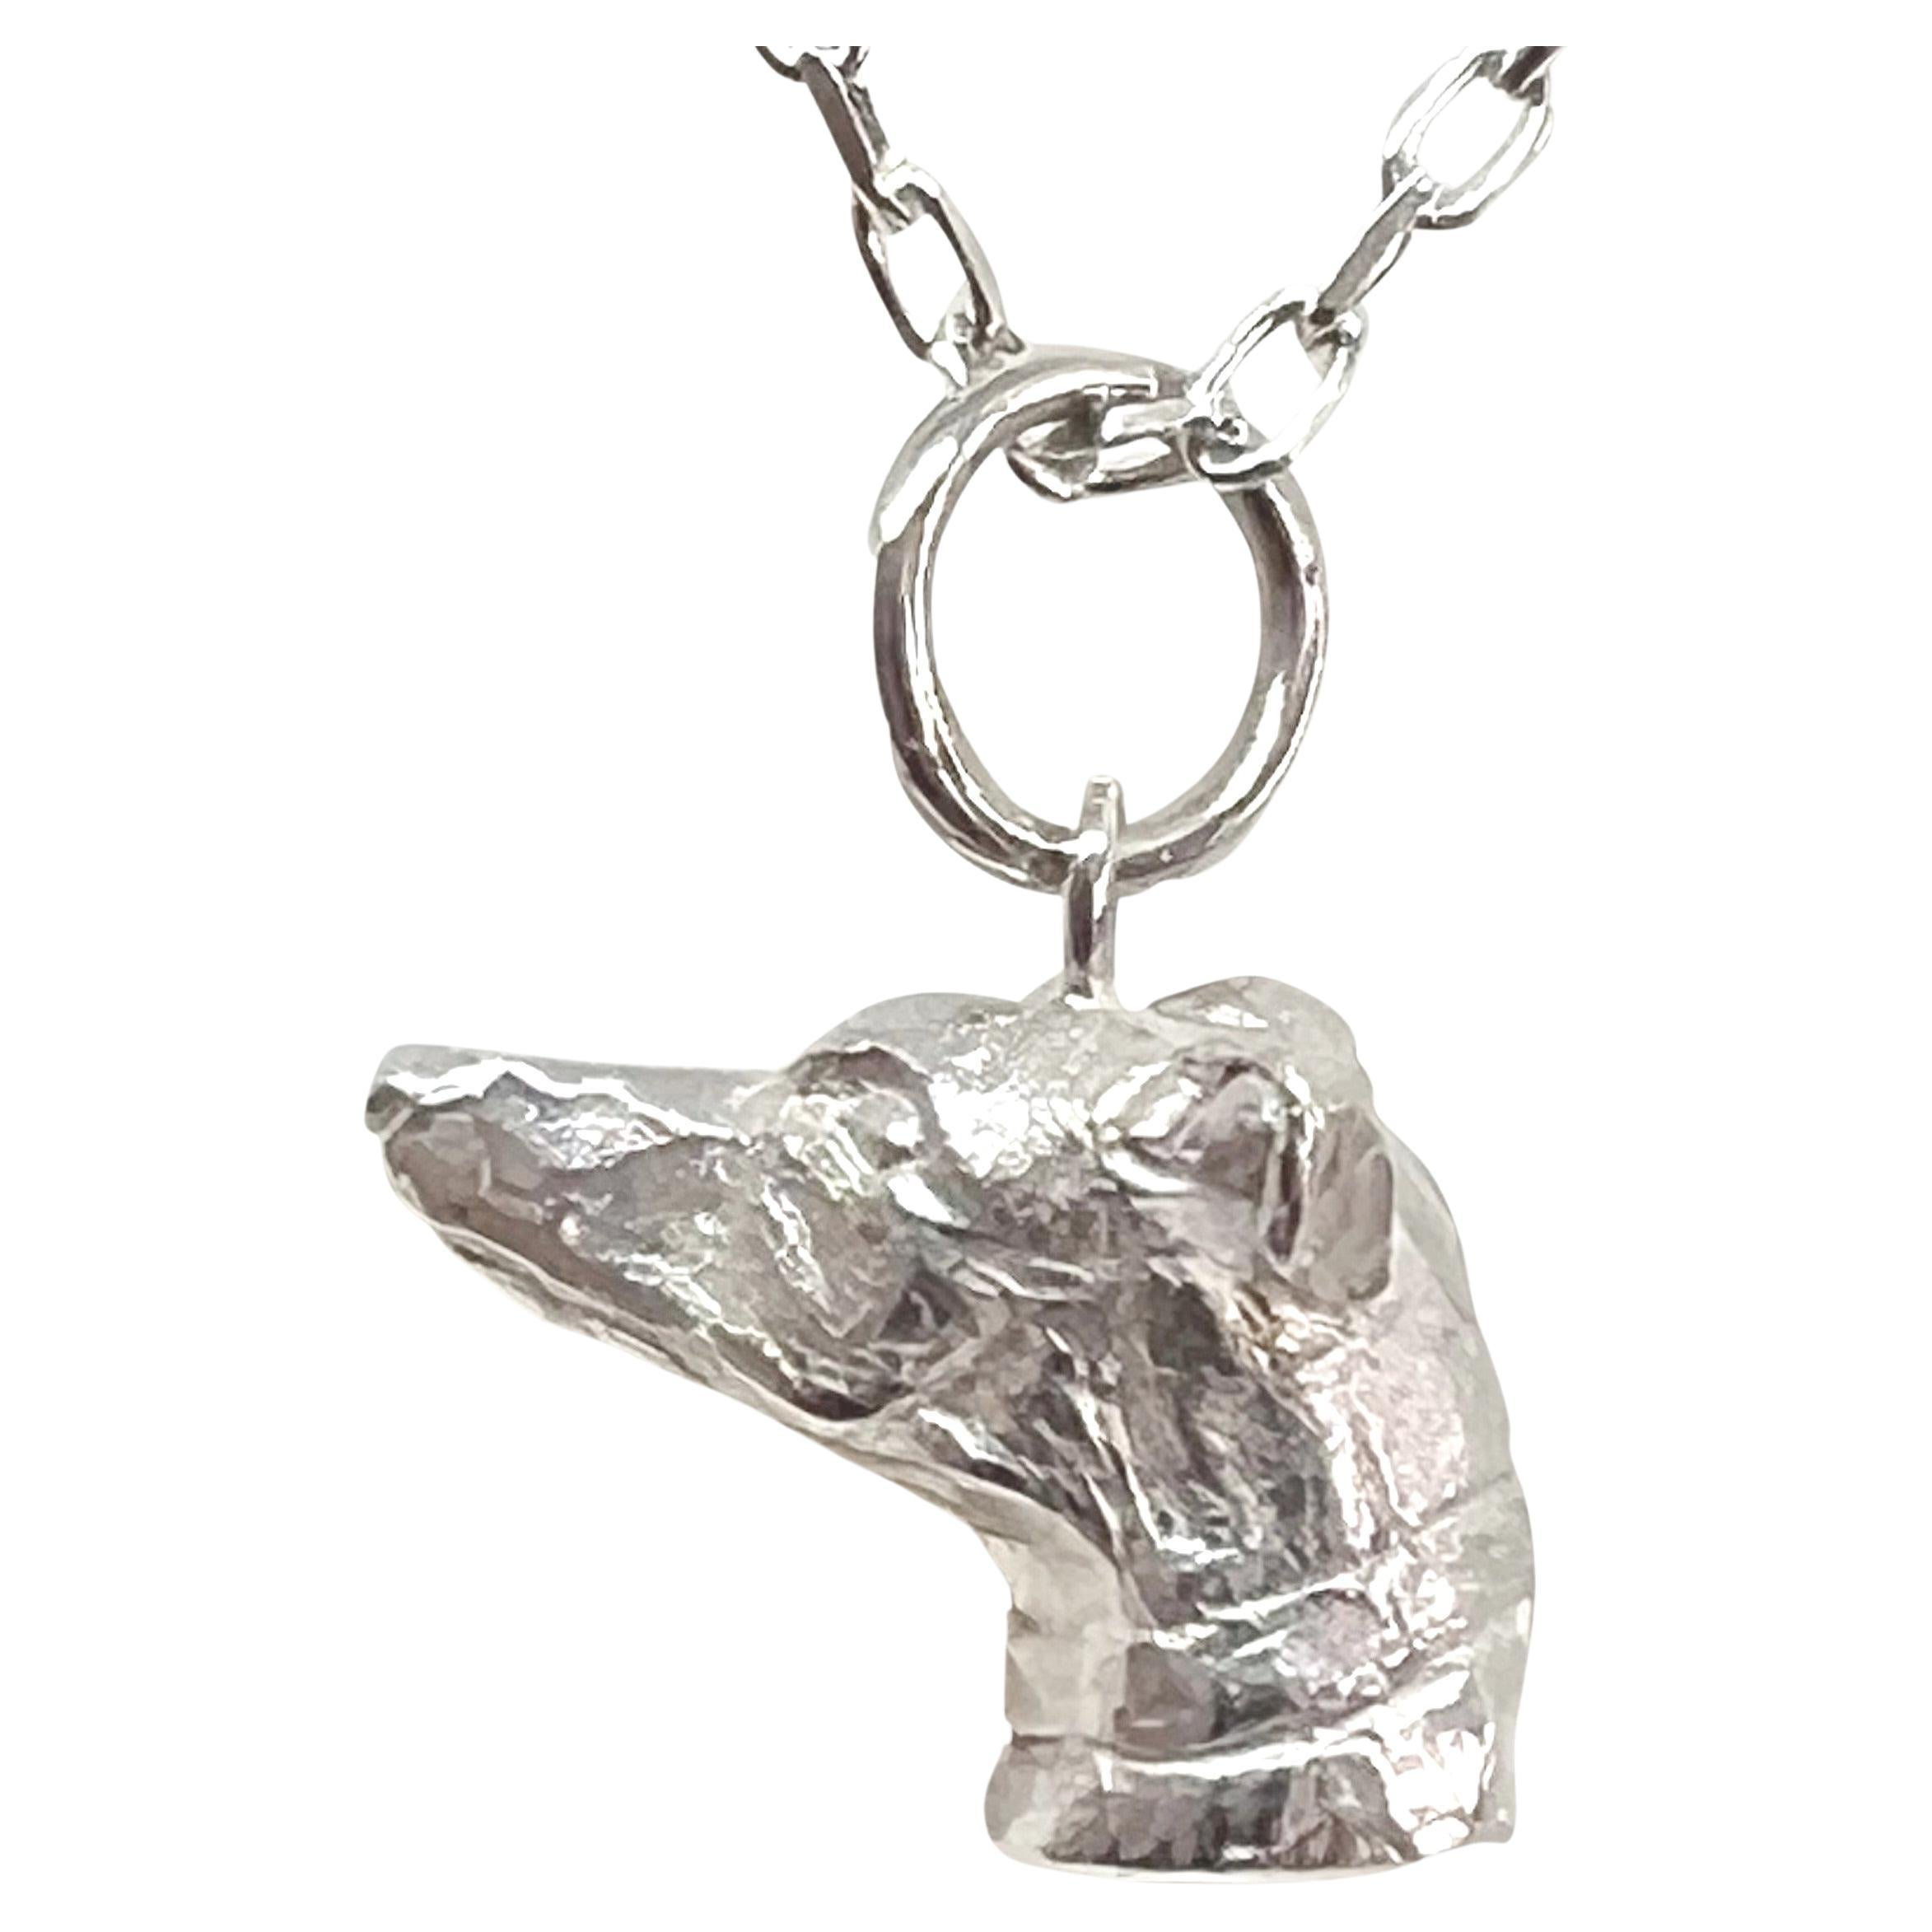 Paul Eaton 'England' Pendant Sterling Silver Miniature Greyhound Dog Head